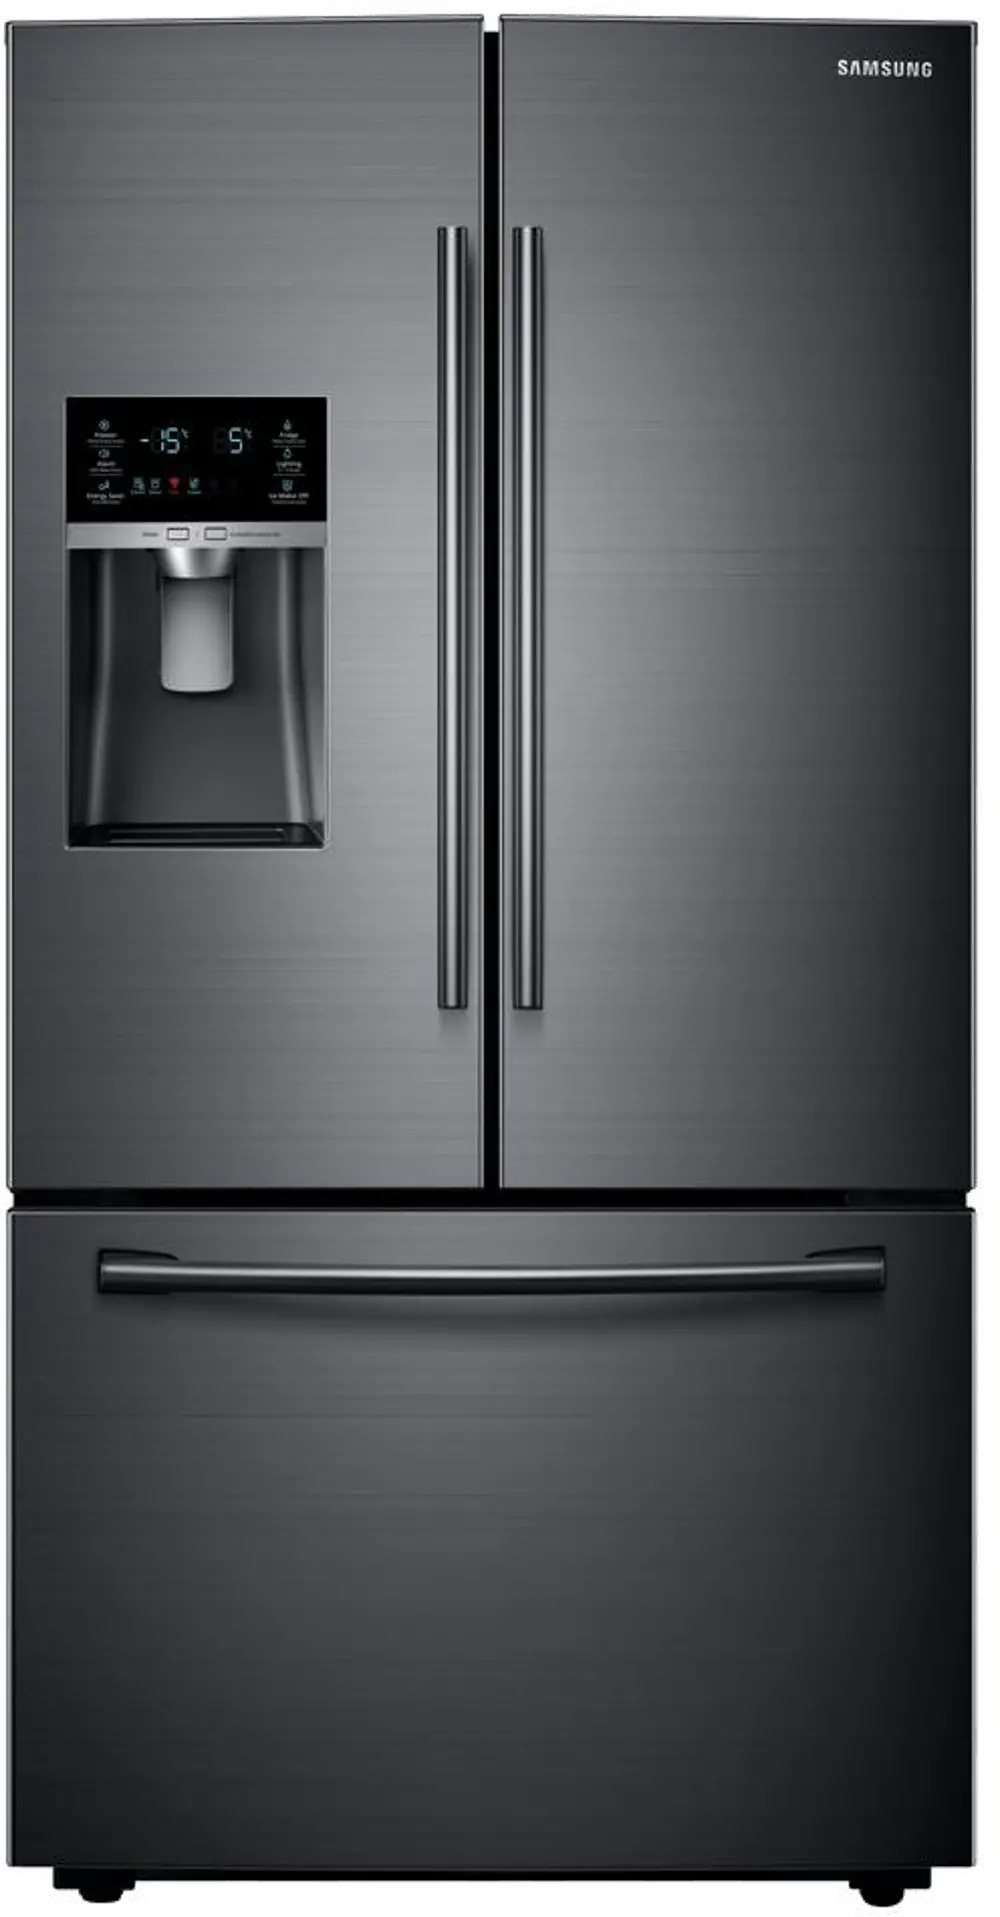 RF23HCEDBSG Samsung Counter Depth French Door Smart Refrigerator - 22.5 cu. ft., 36 Inch Black Stainless Steel-1